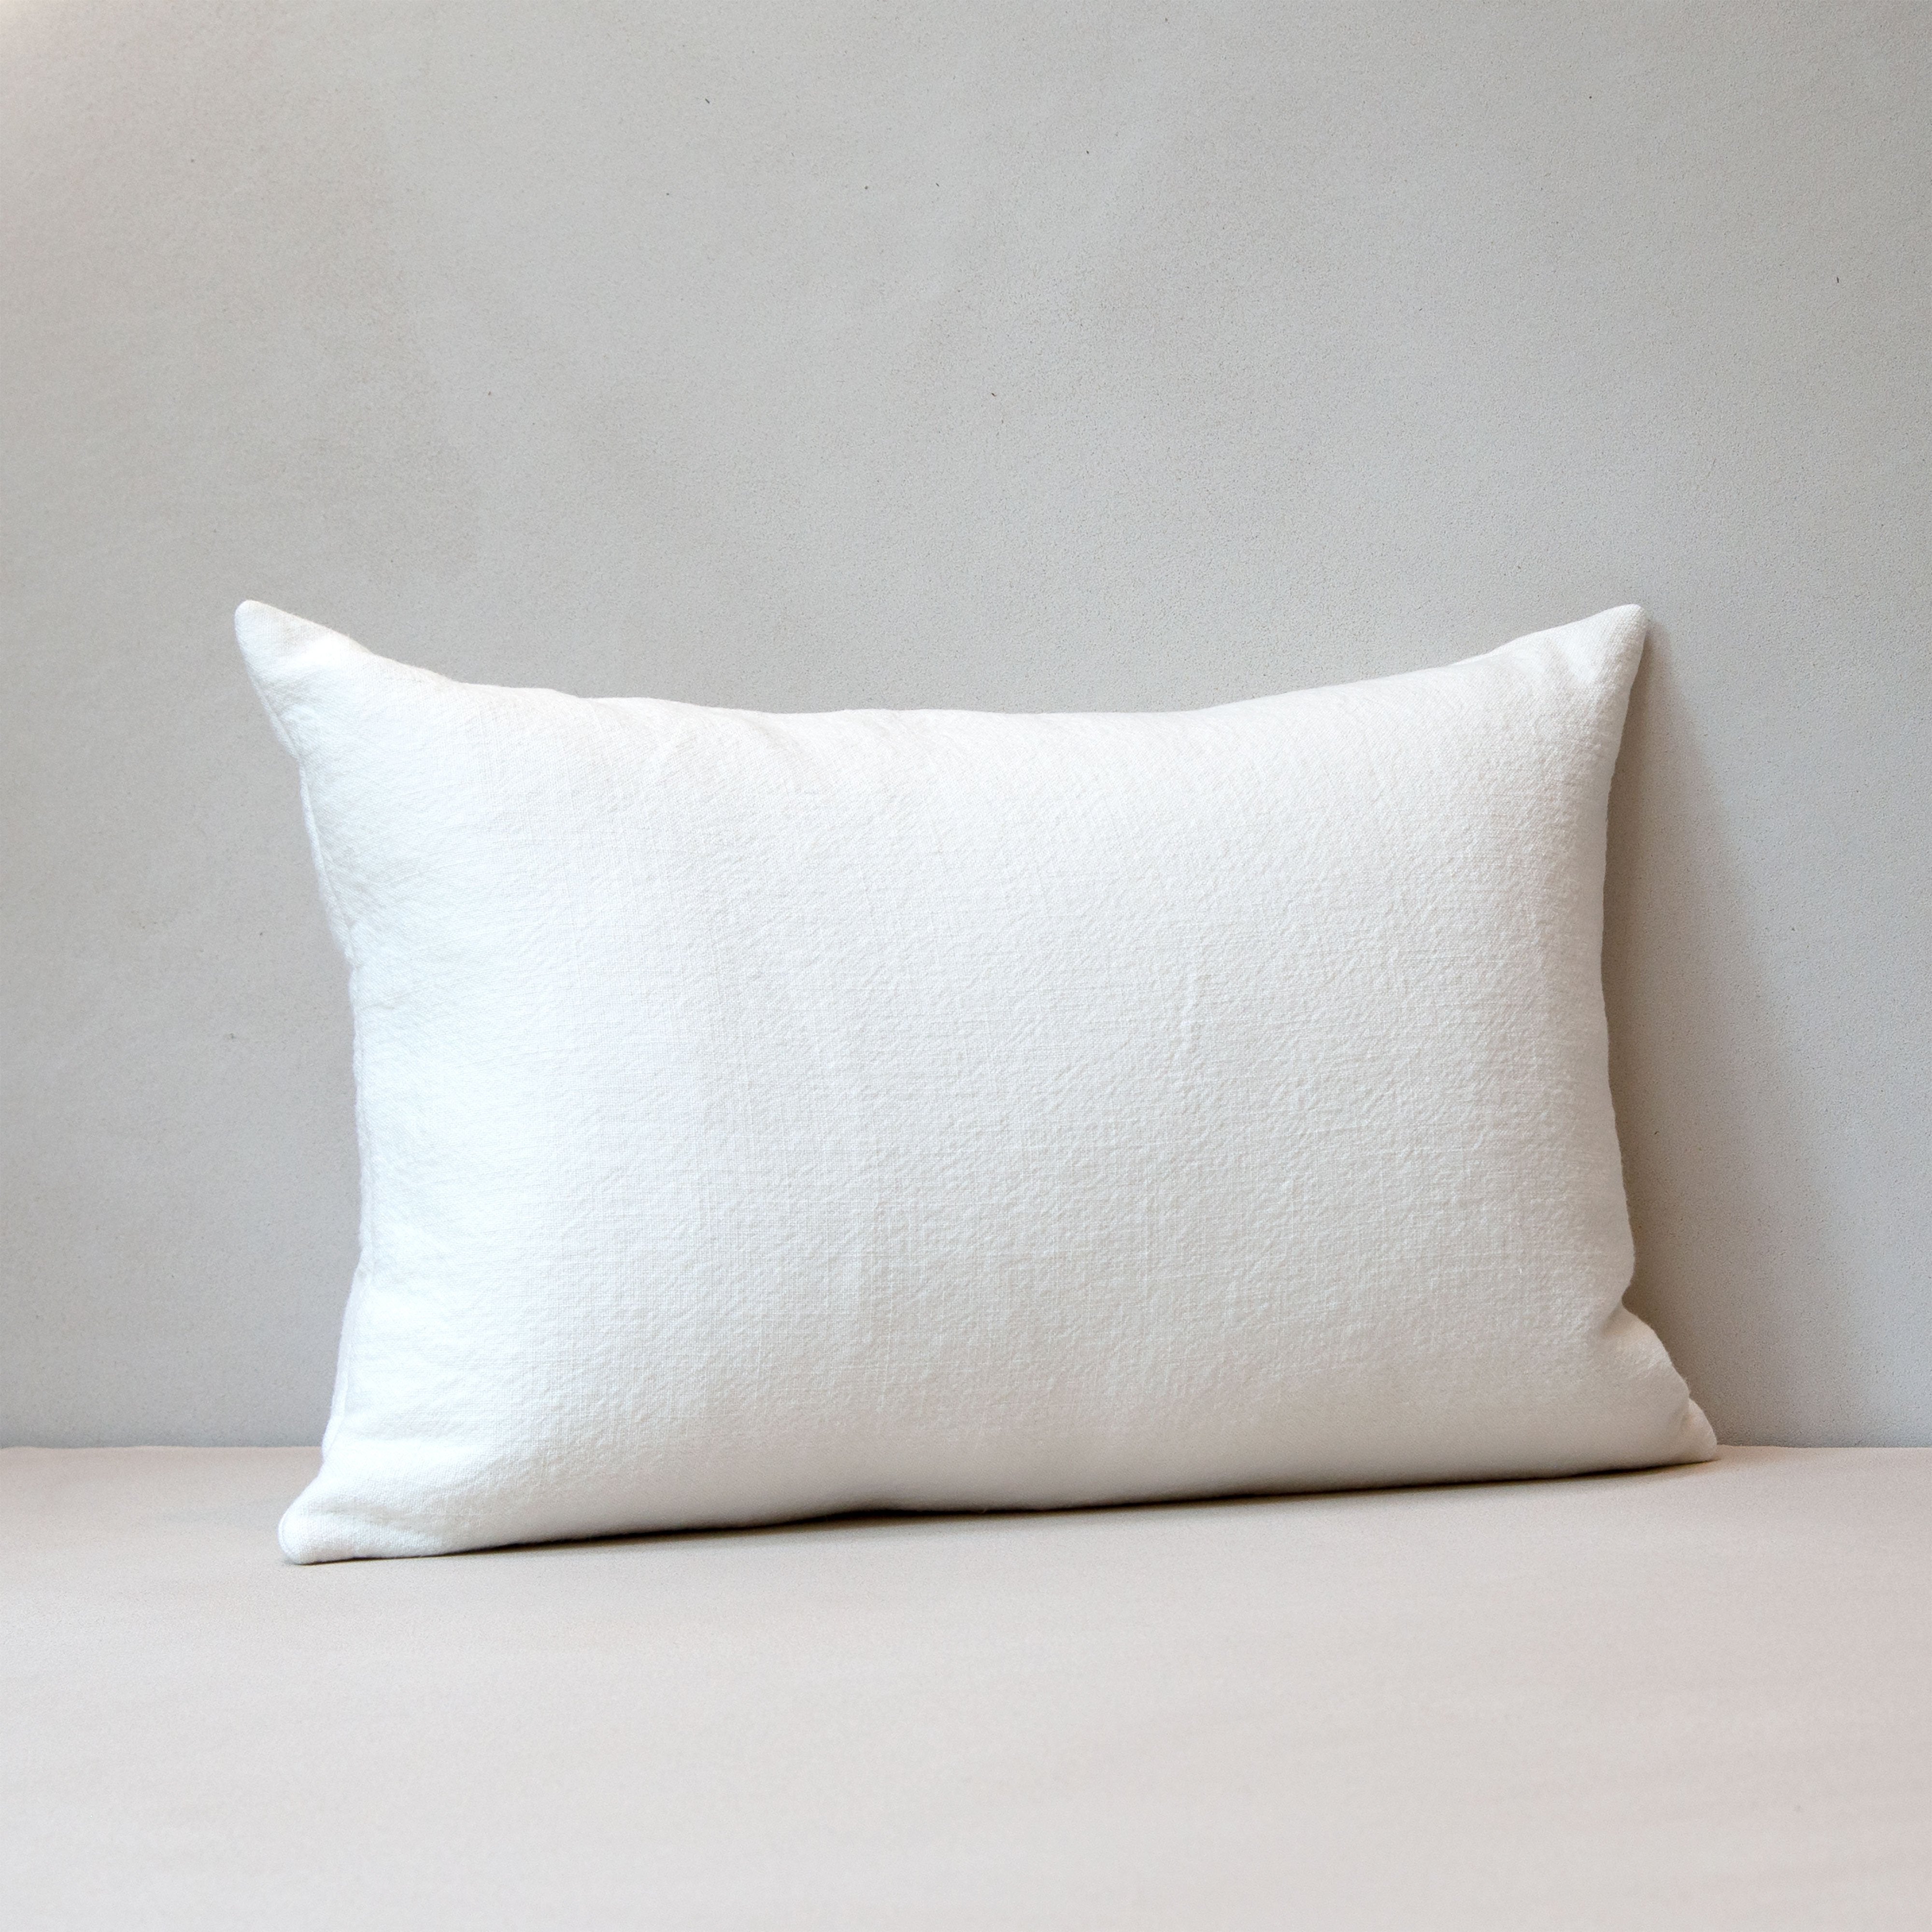 All Cushions | Khayni Contemporary Interiors